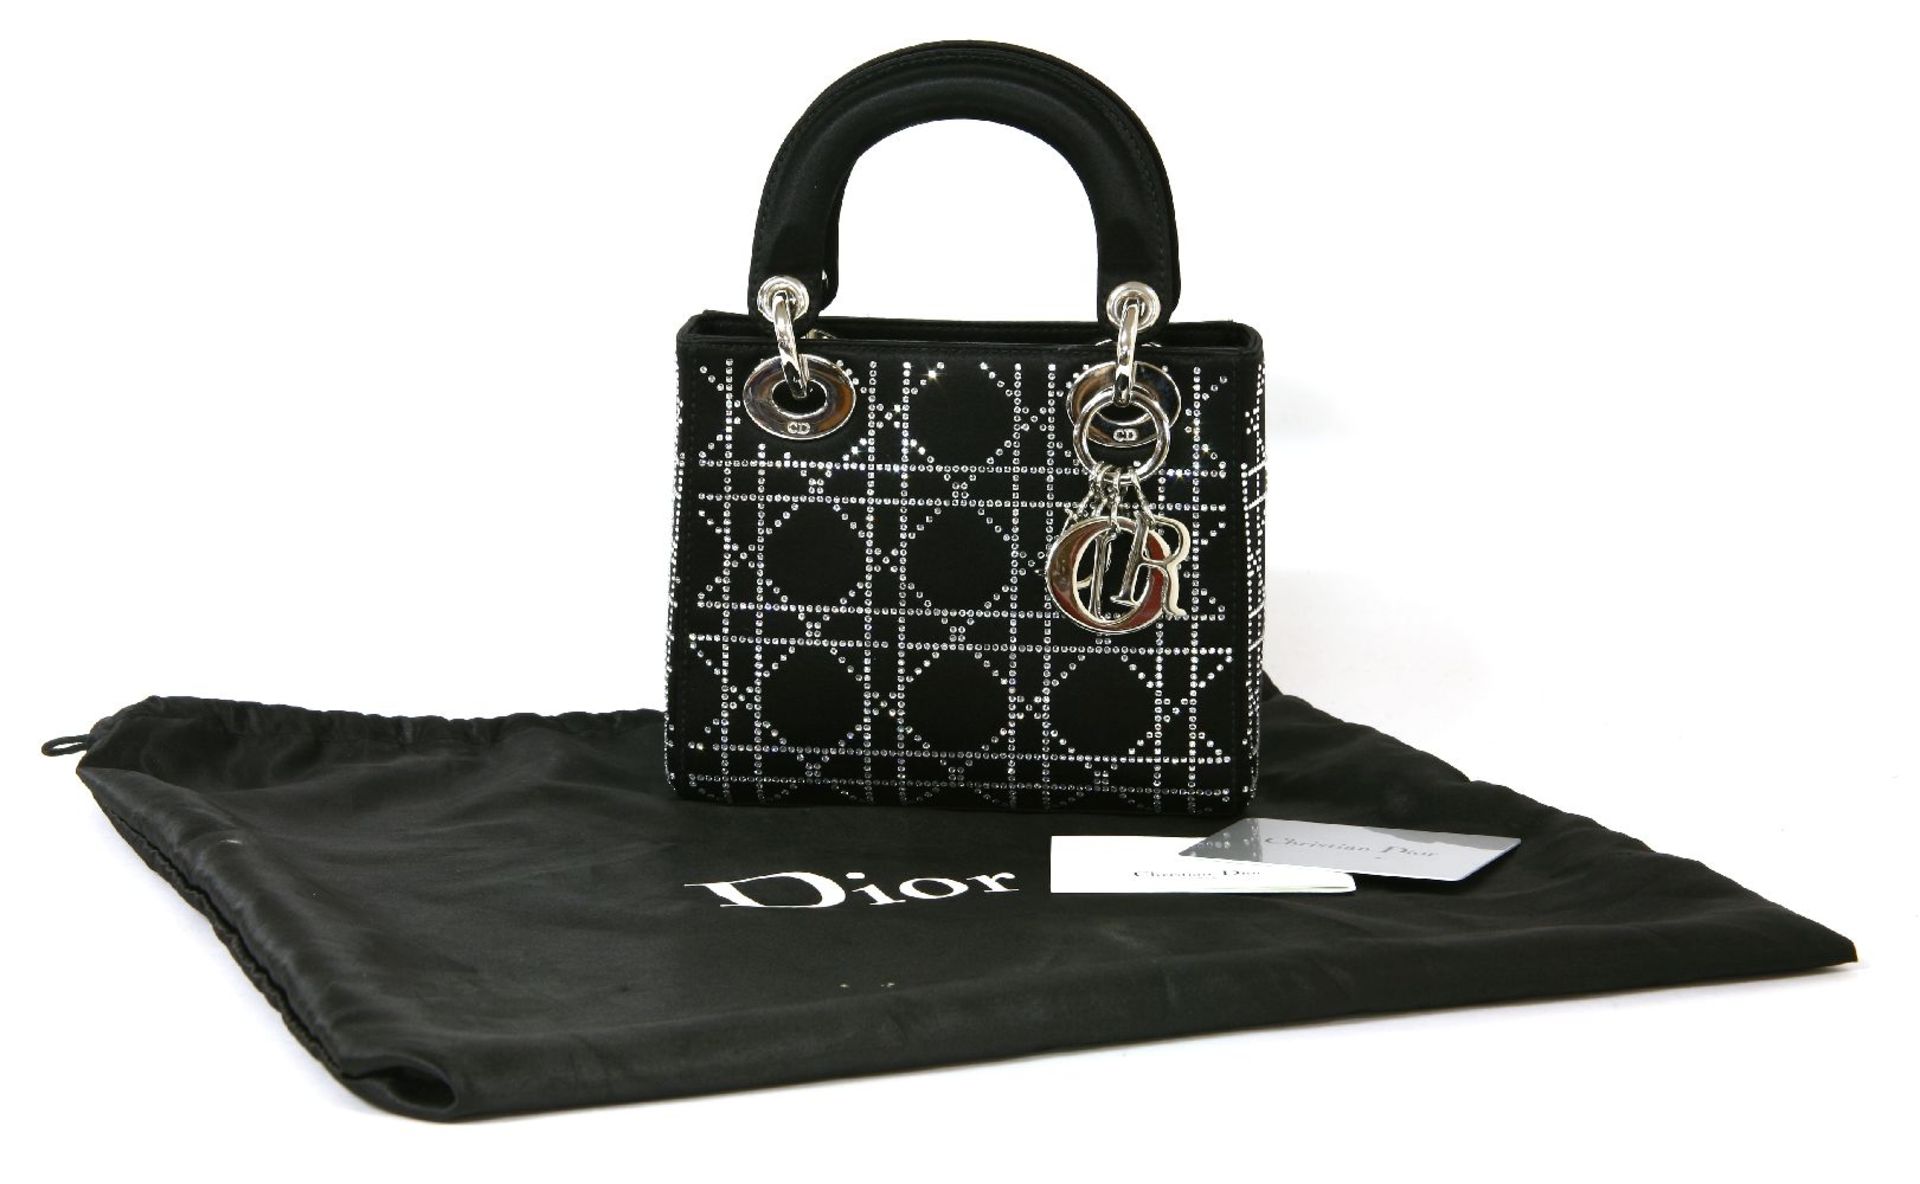 A Christian Dior 'Lady Dior' black satin evening handbag, with Swarovski crystal embellishment - Image 2 of 2